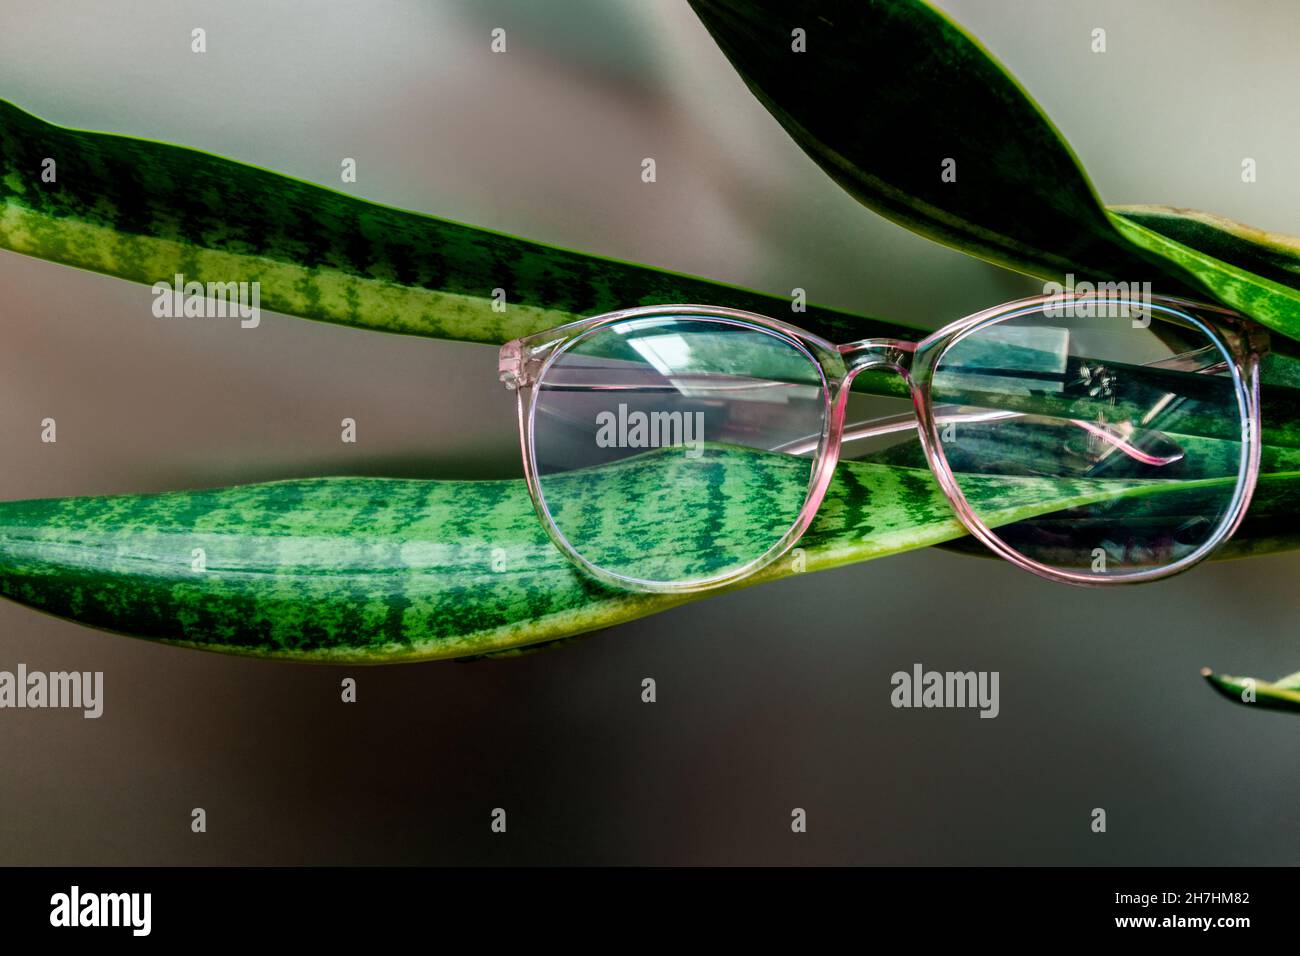 Gafas de ordenador de moda para mujer con marcos verdes. Fondo tropical. Foto de stock